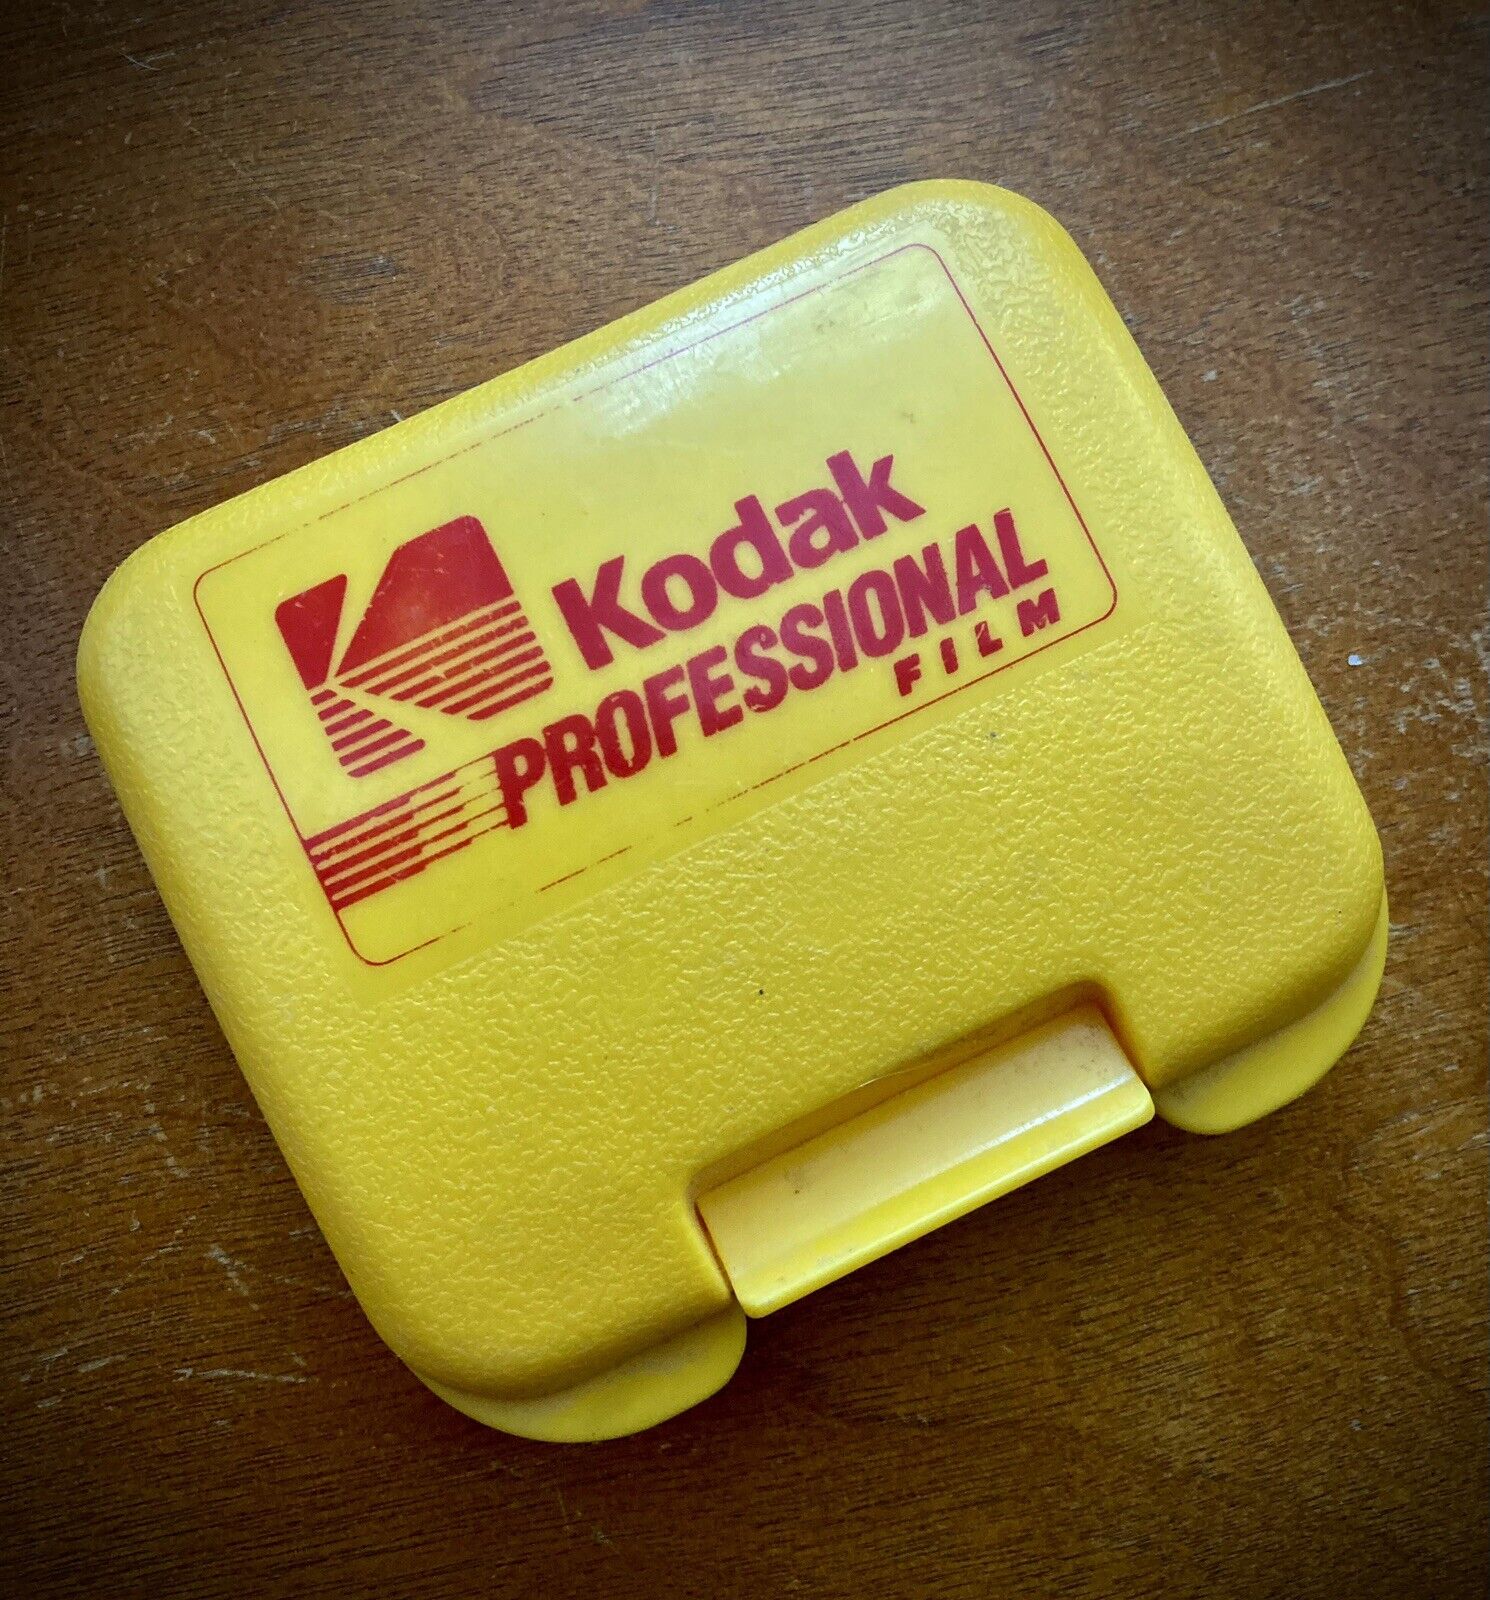 RARE Kodak - Promotional Case For Professional 120 Film Types Rare